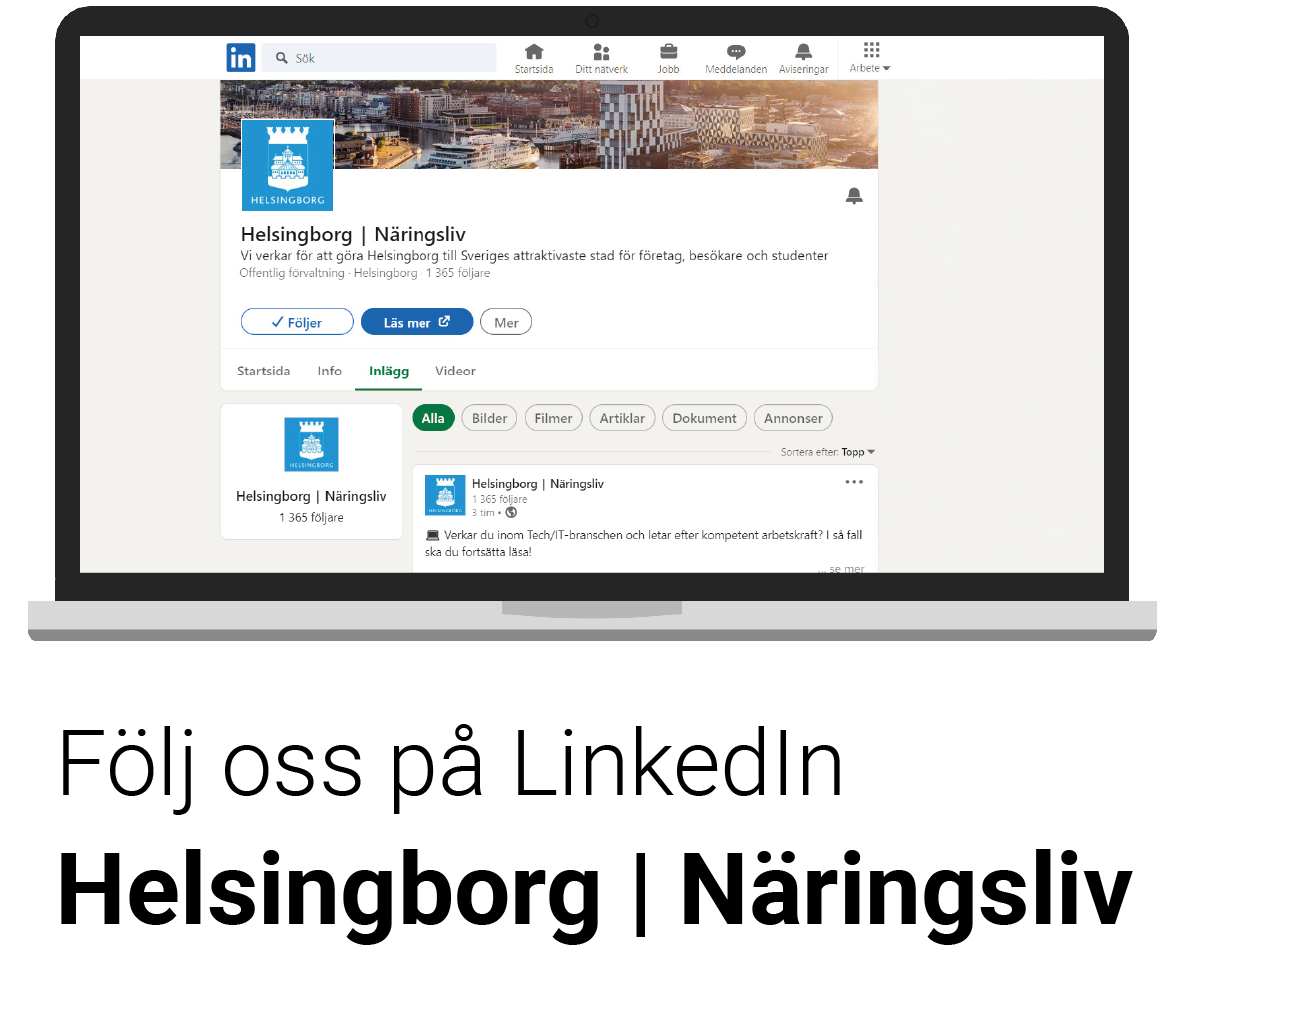 Följ oss på LinkedIn - Helsingborg Näringsliv